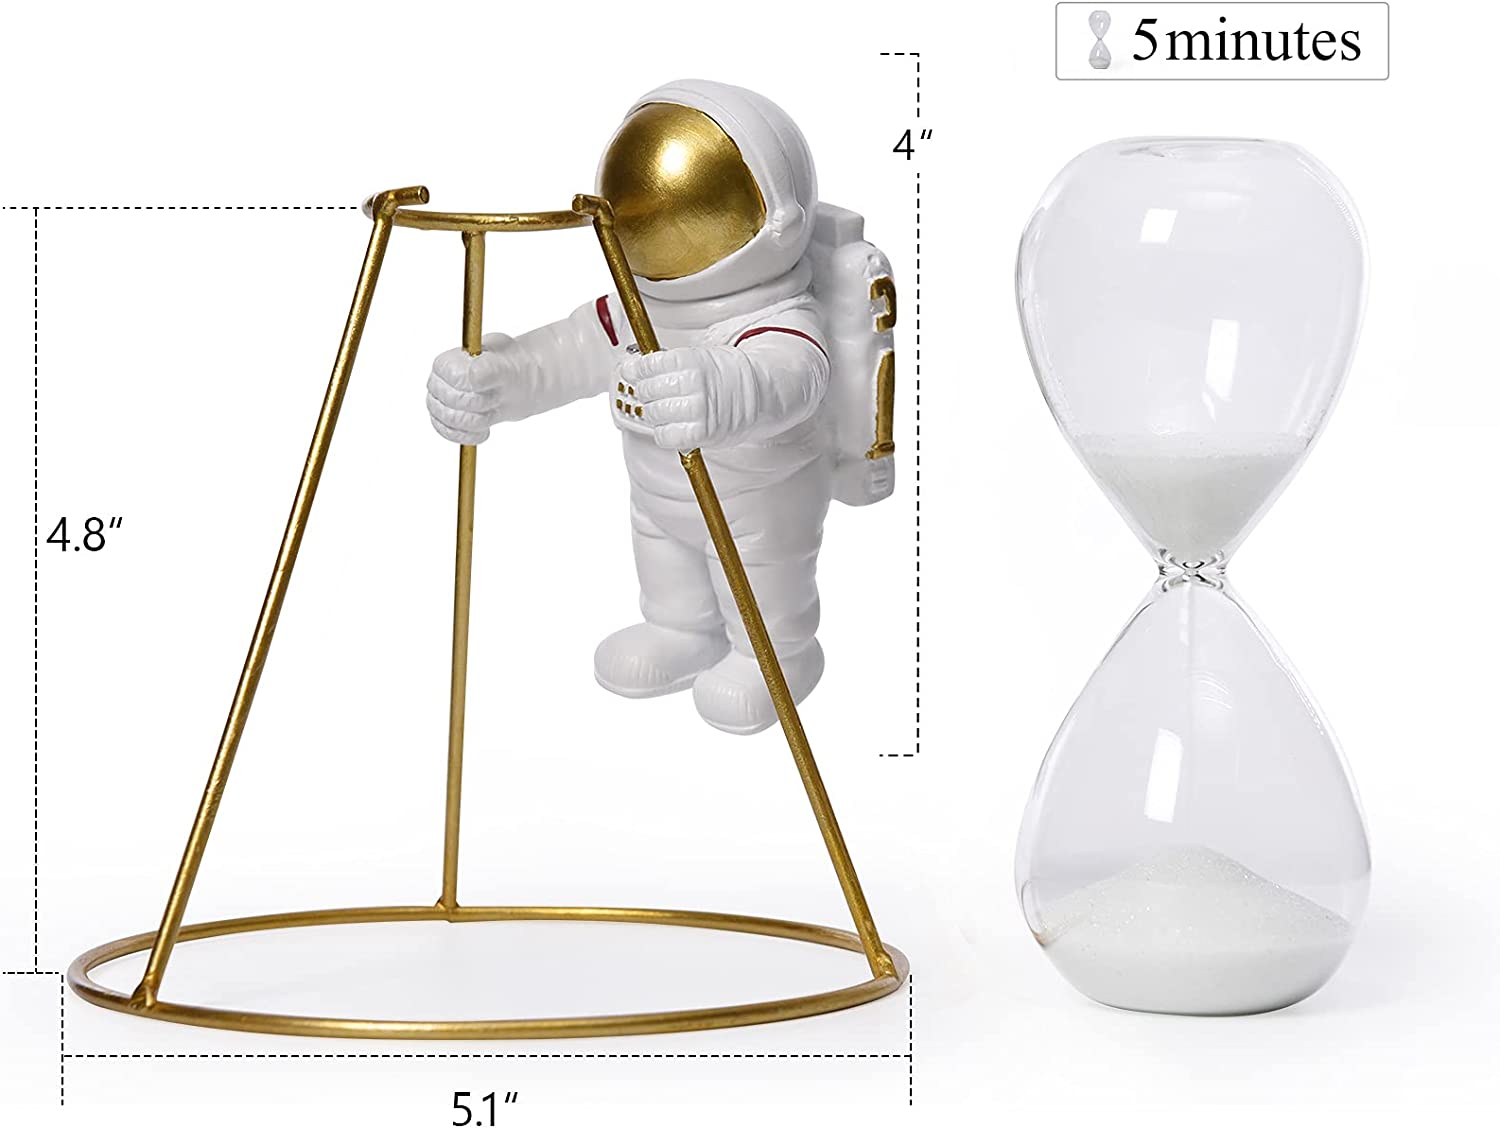 Decorative Astronaut Hourglass1